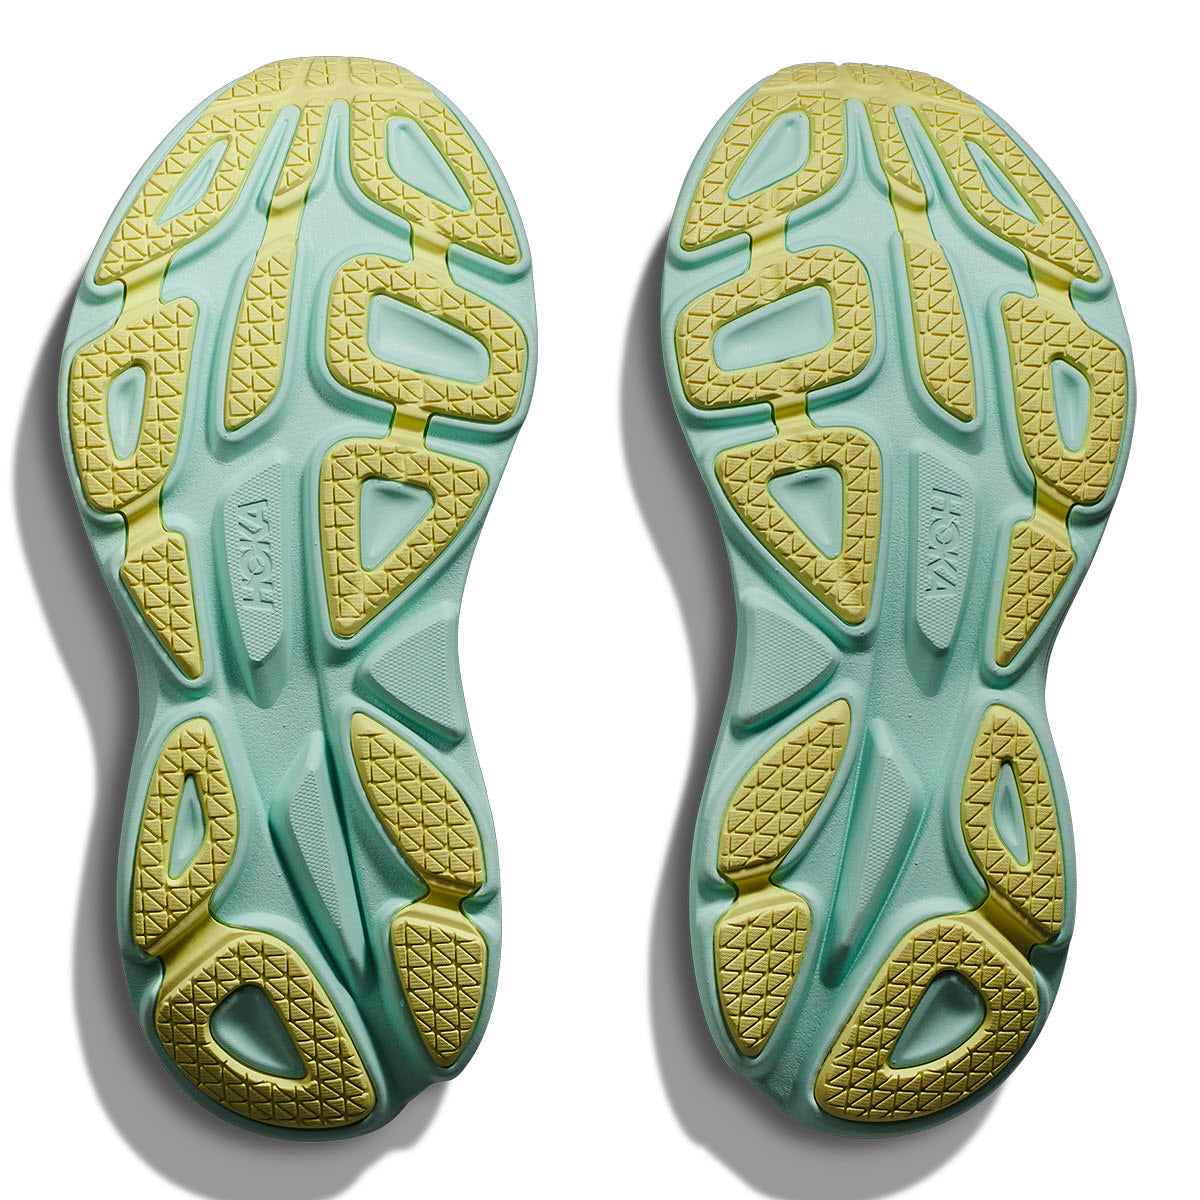 Pair of Hoka Bondi 8 Blanc de Blanc/Sunlit Ocean - Womens sport shoe soles with intricate tread patterns and extended heel geometry.